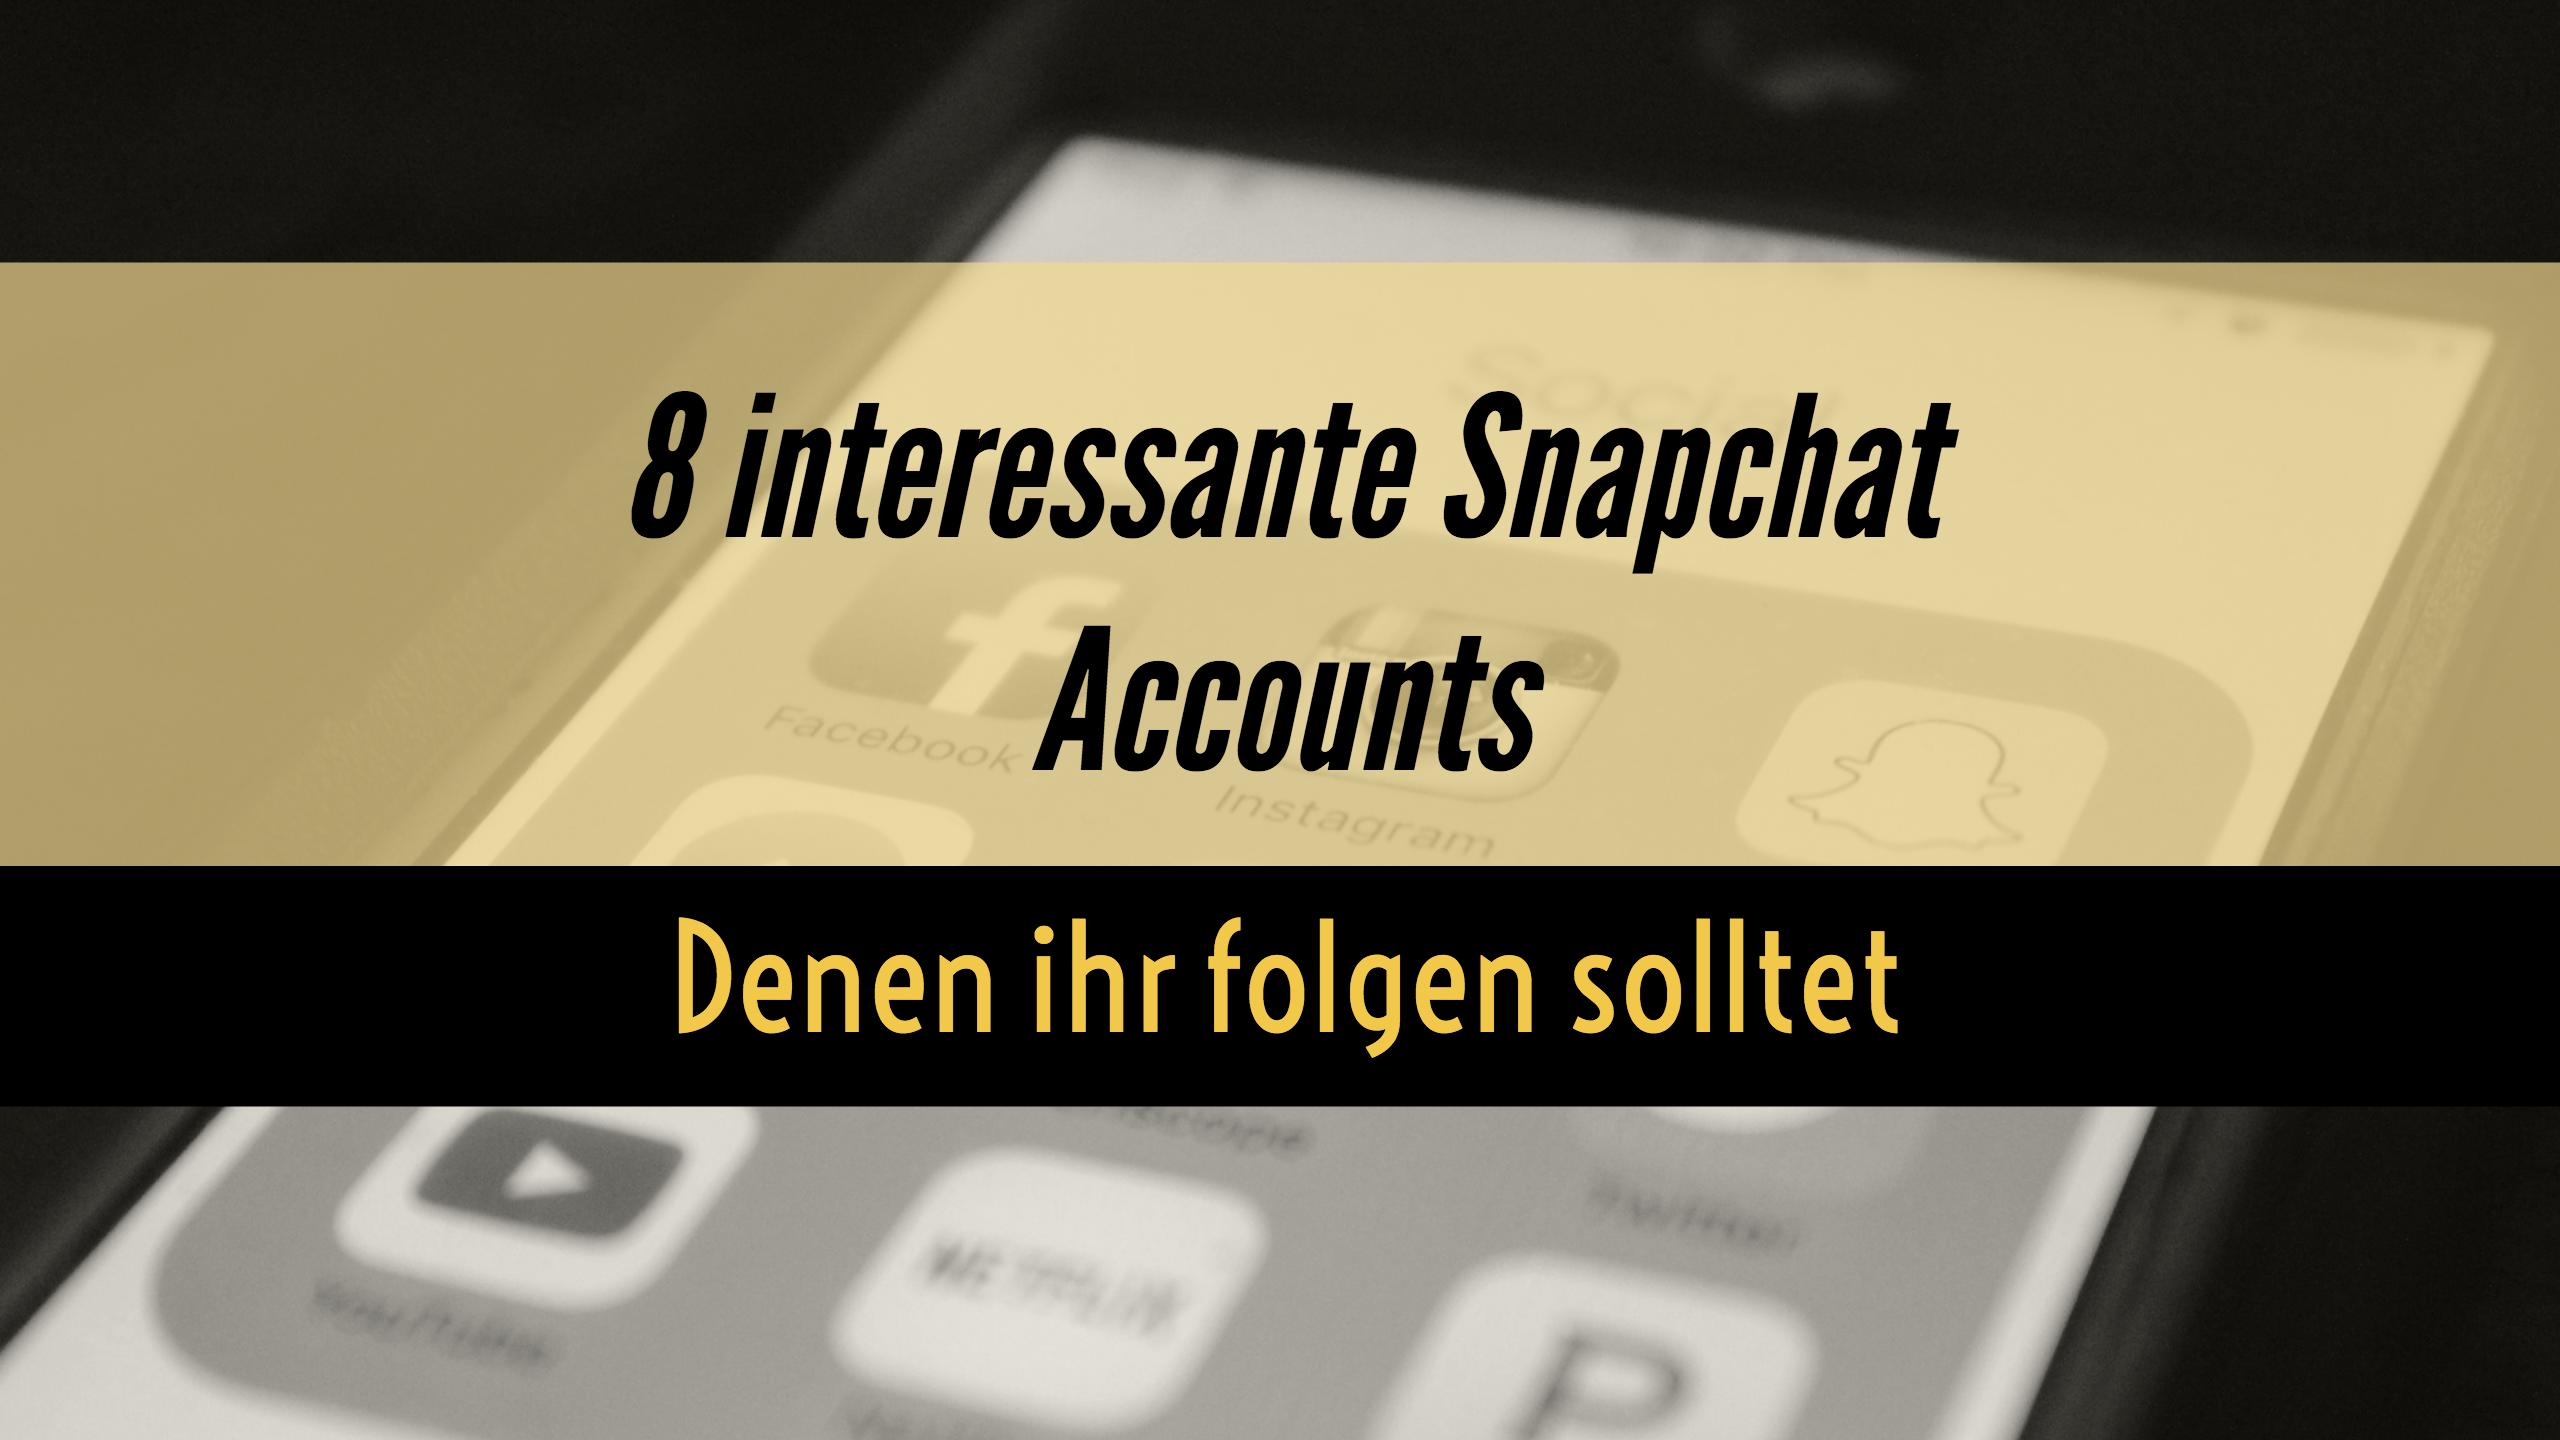 You are currently viewing 8 interessante Snapchat Accounts, denen ihr folgen solltet